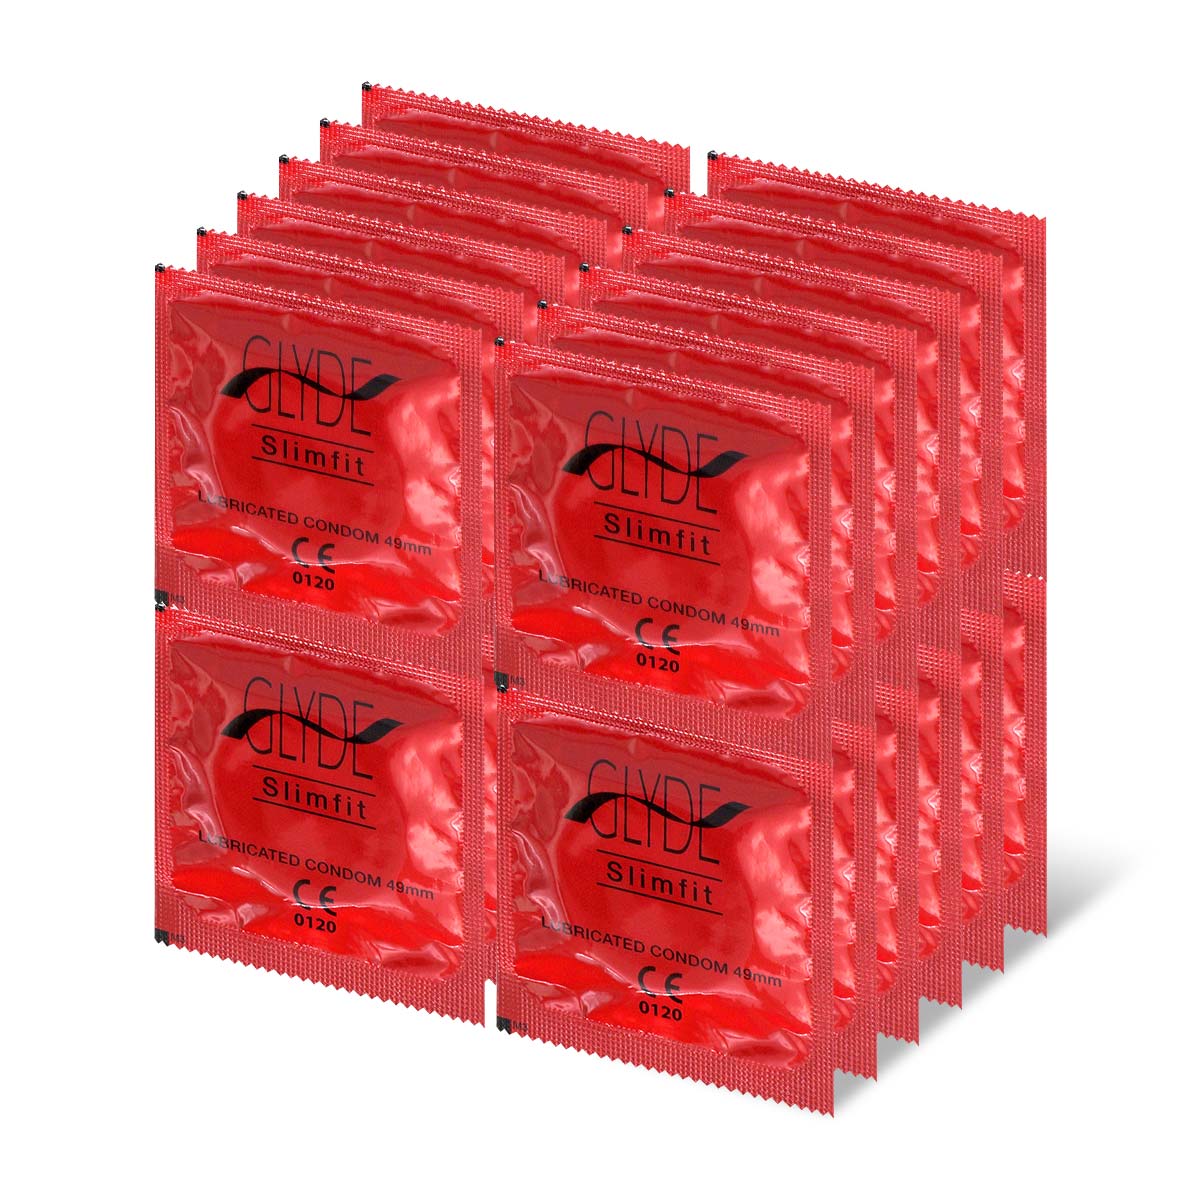 Glyde Vegan Condom Slimfit 49mm 24's Pack Latex Condom-p_1